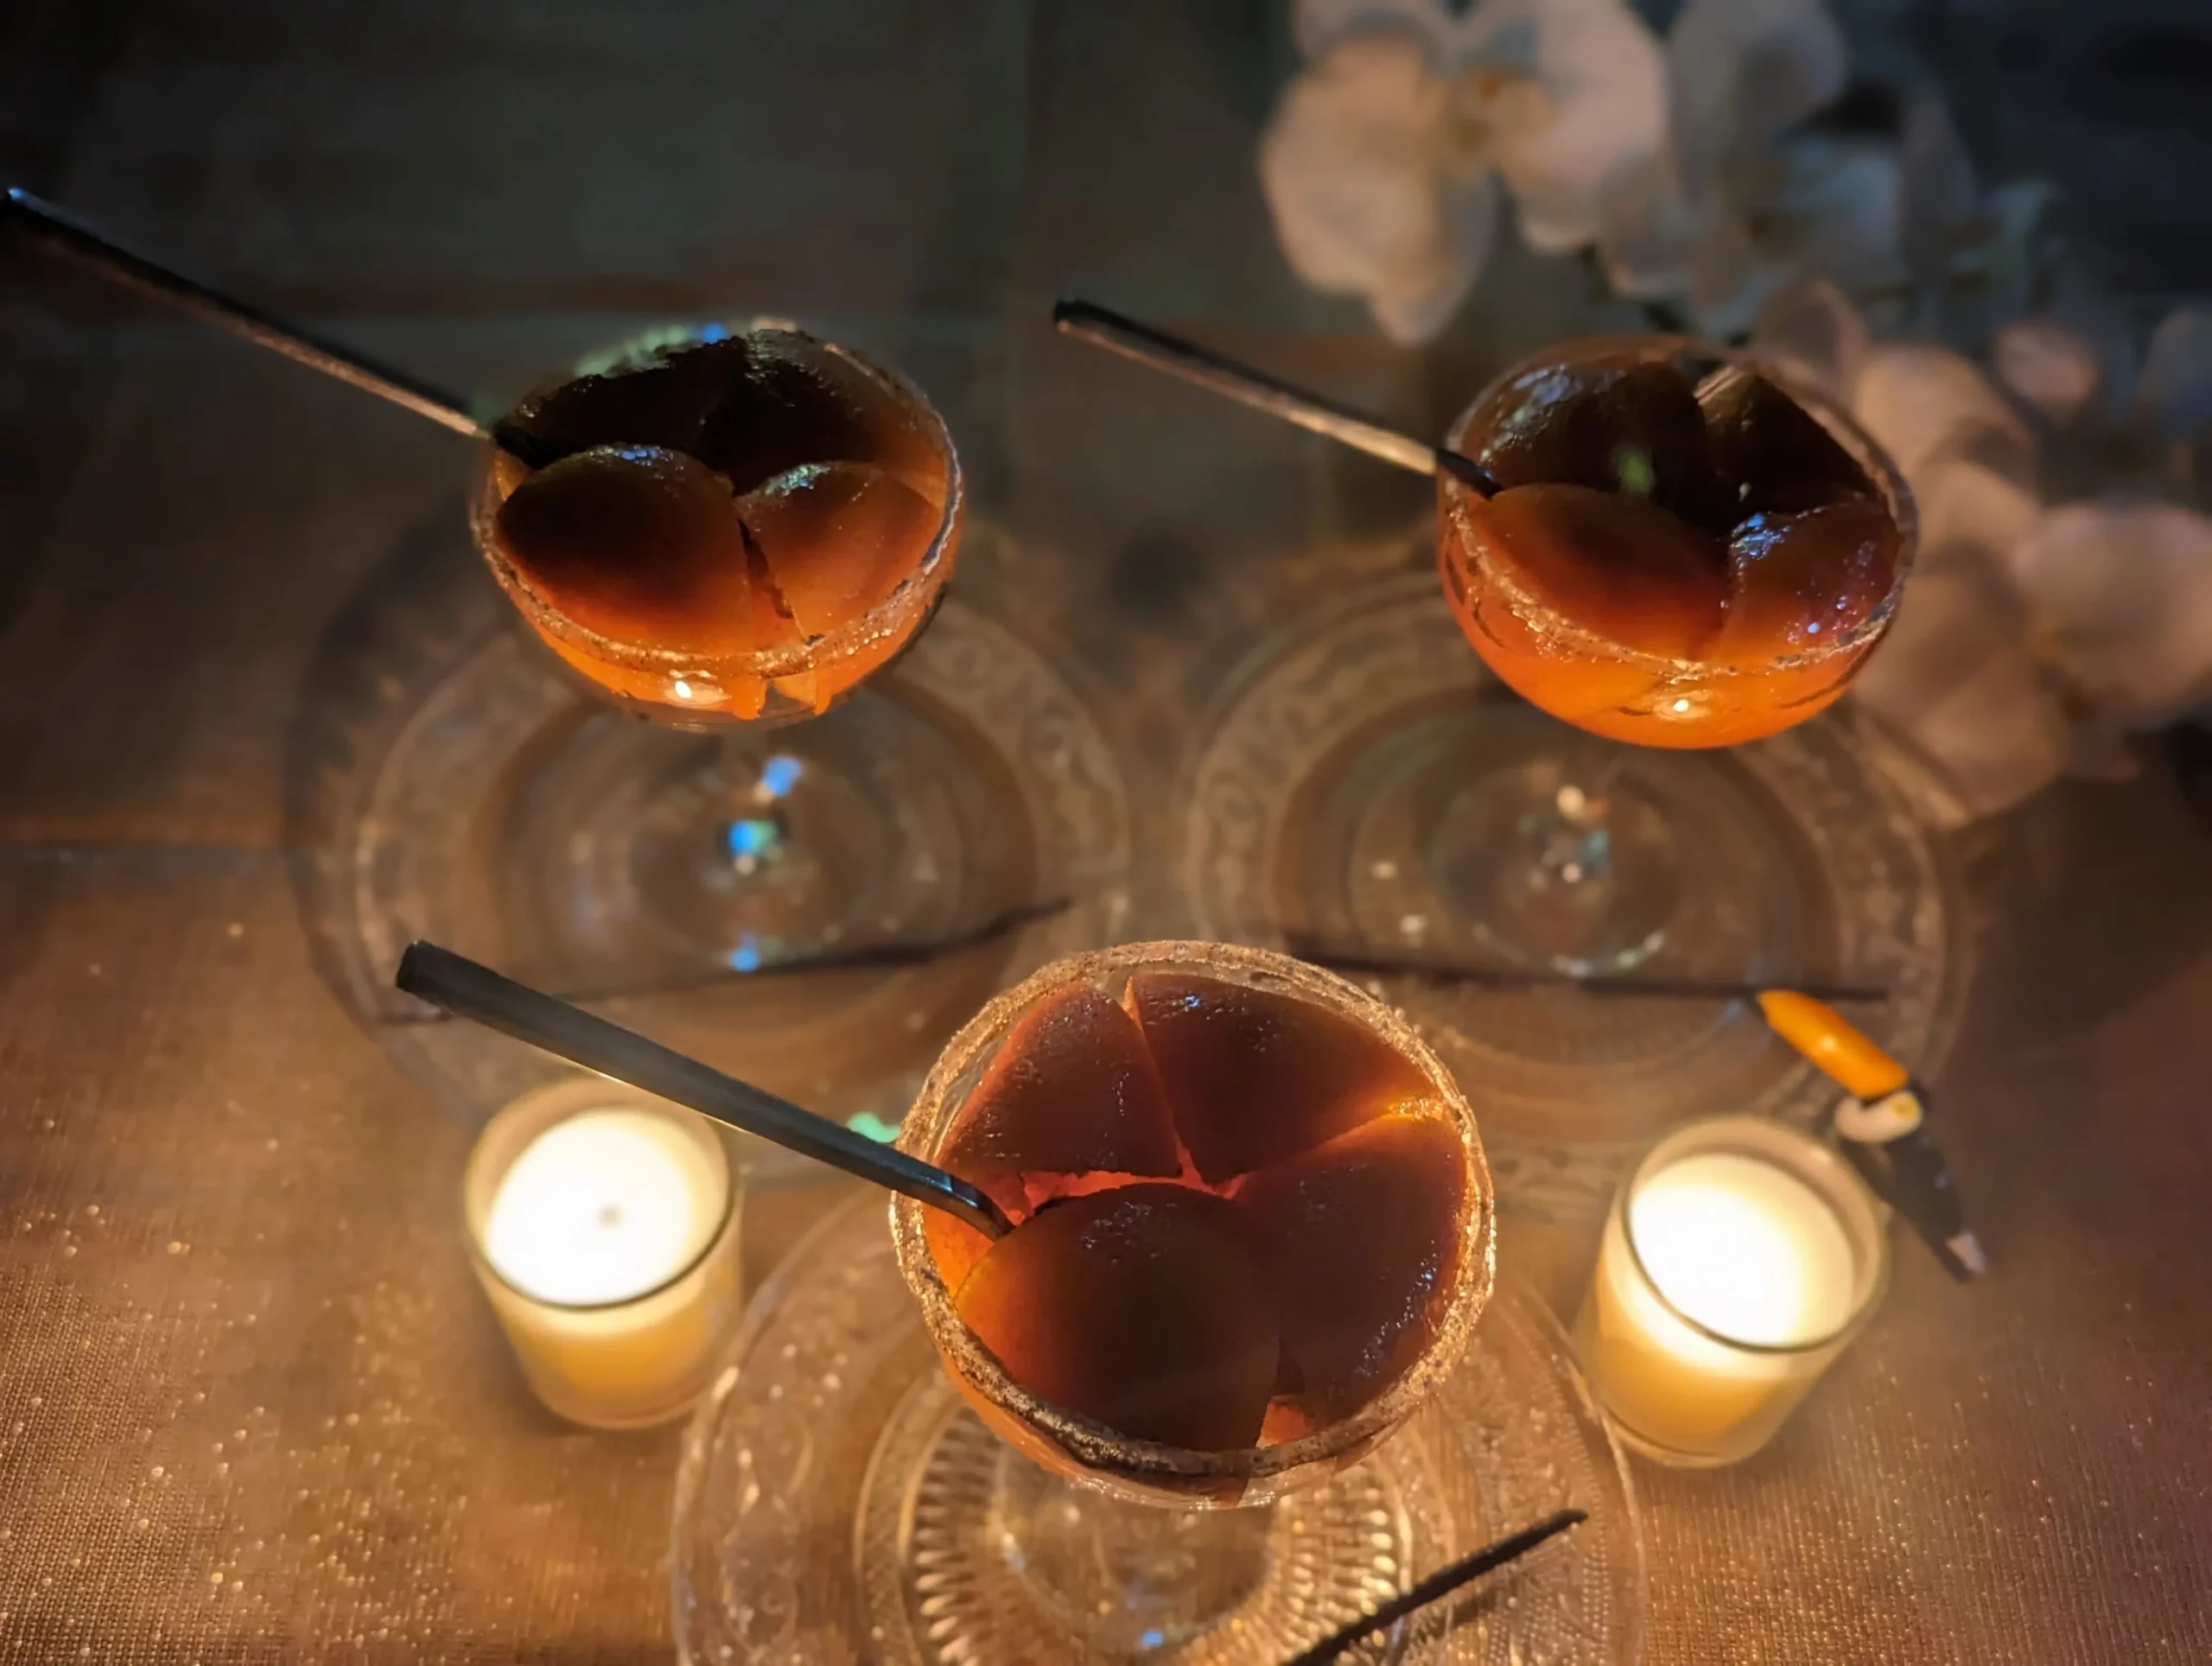 Recette Vani Saveurs orange confite gousse vanille gourmet des Comores